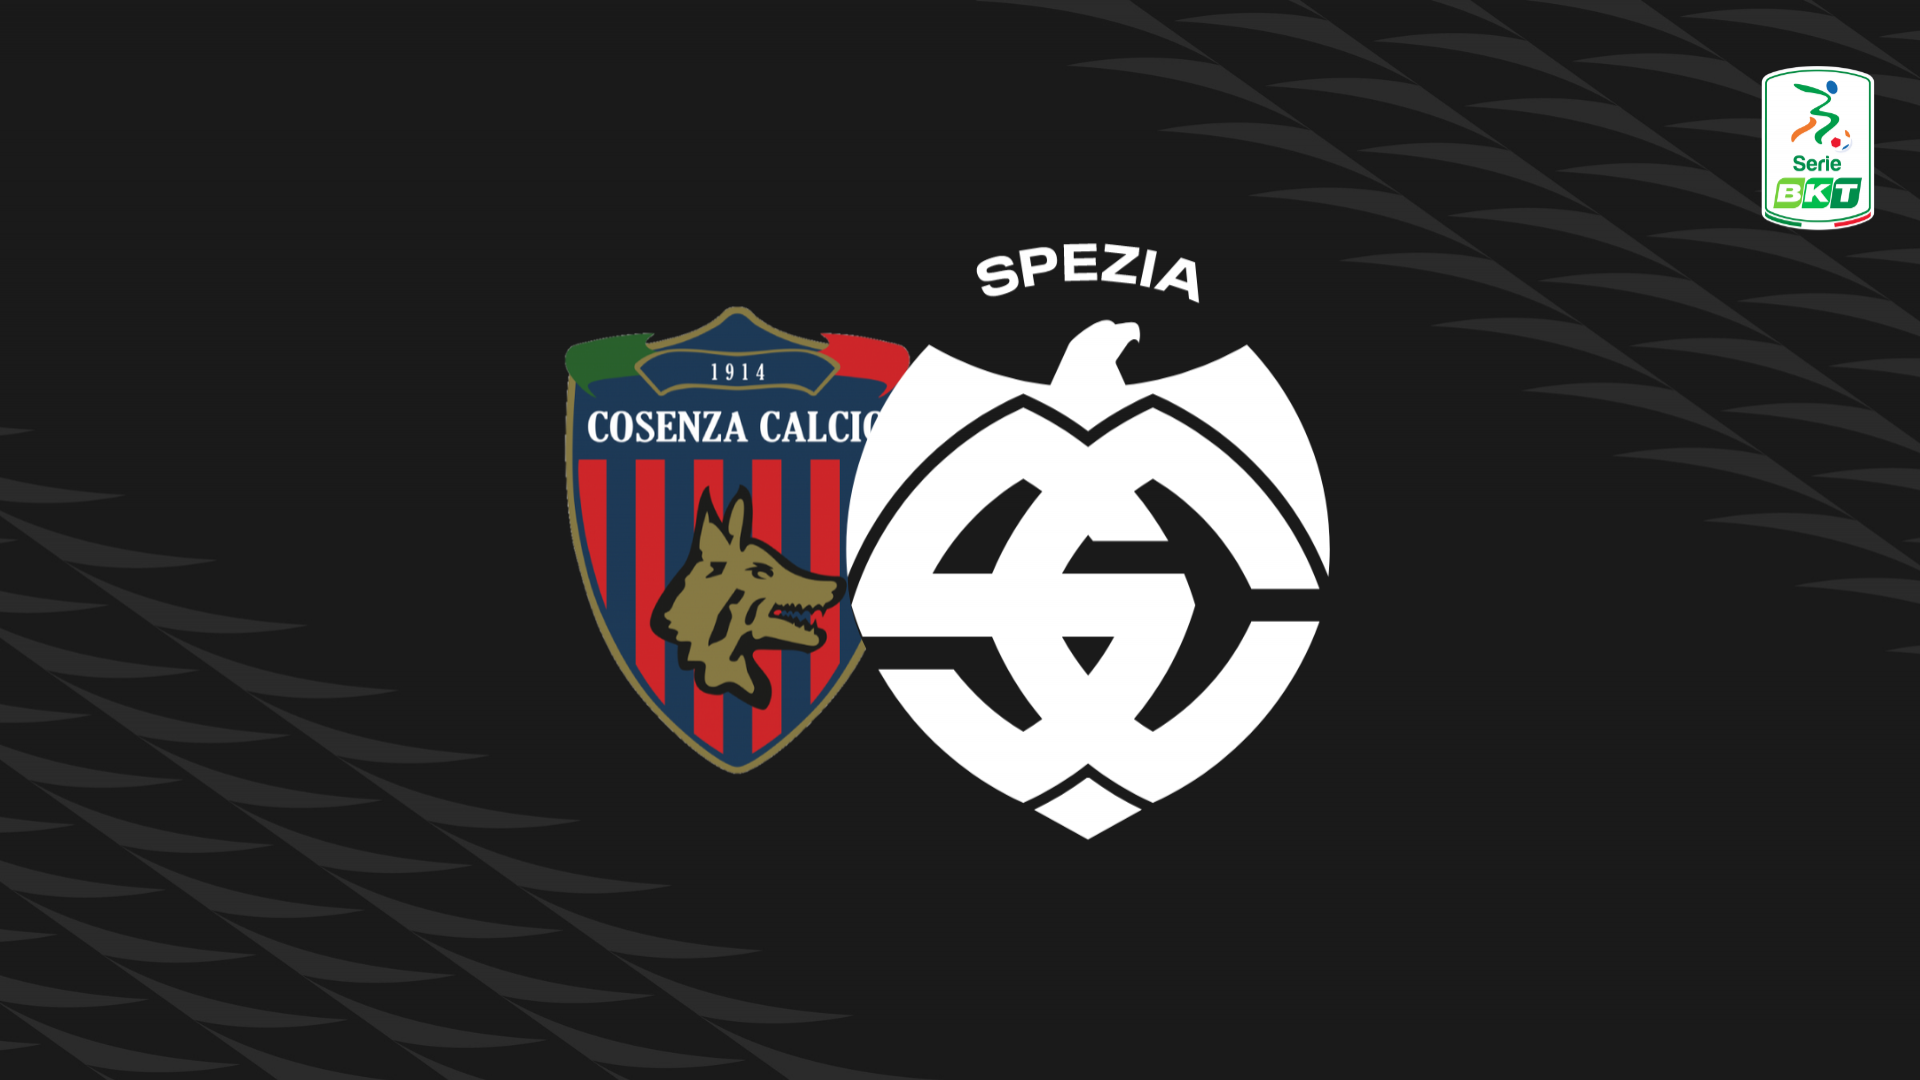 Serie BKT: Cosenza-Spezia 2-2